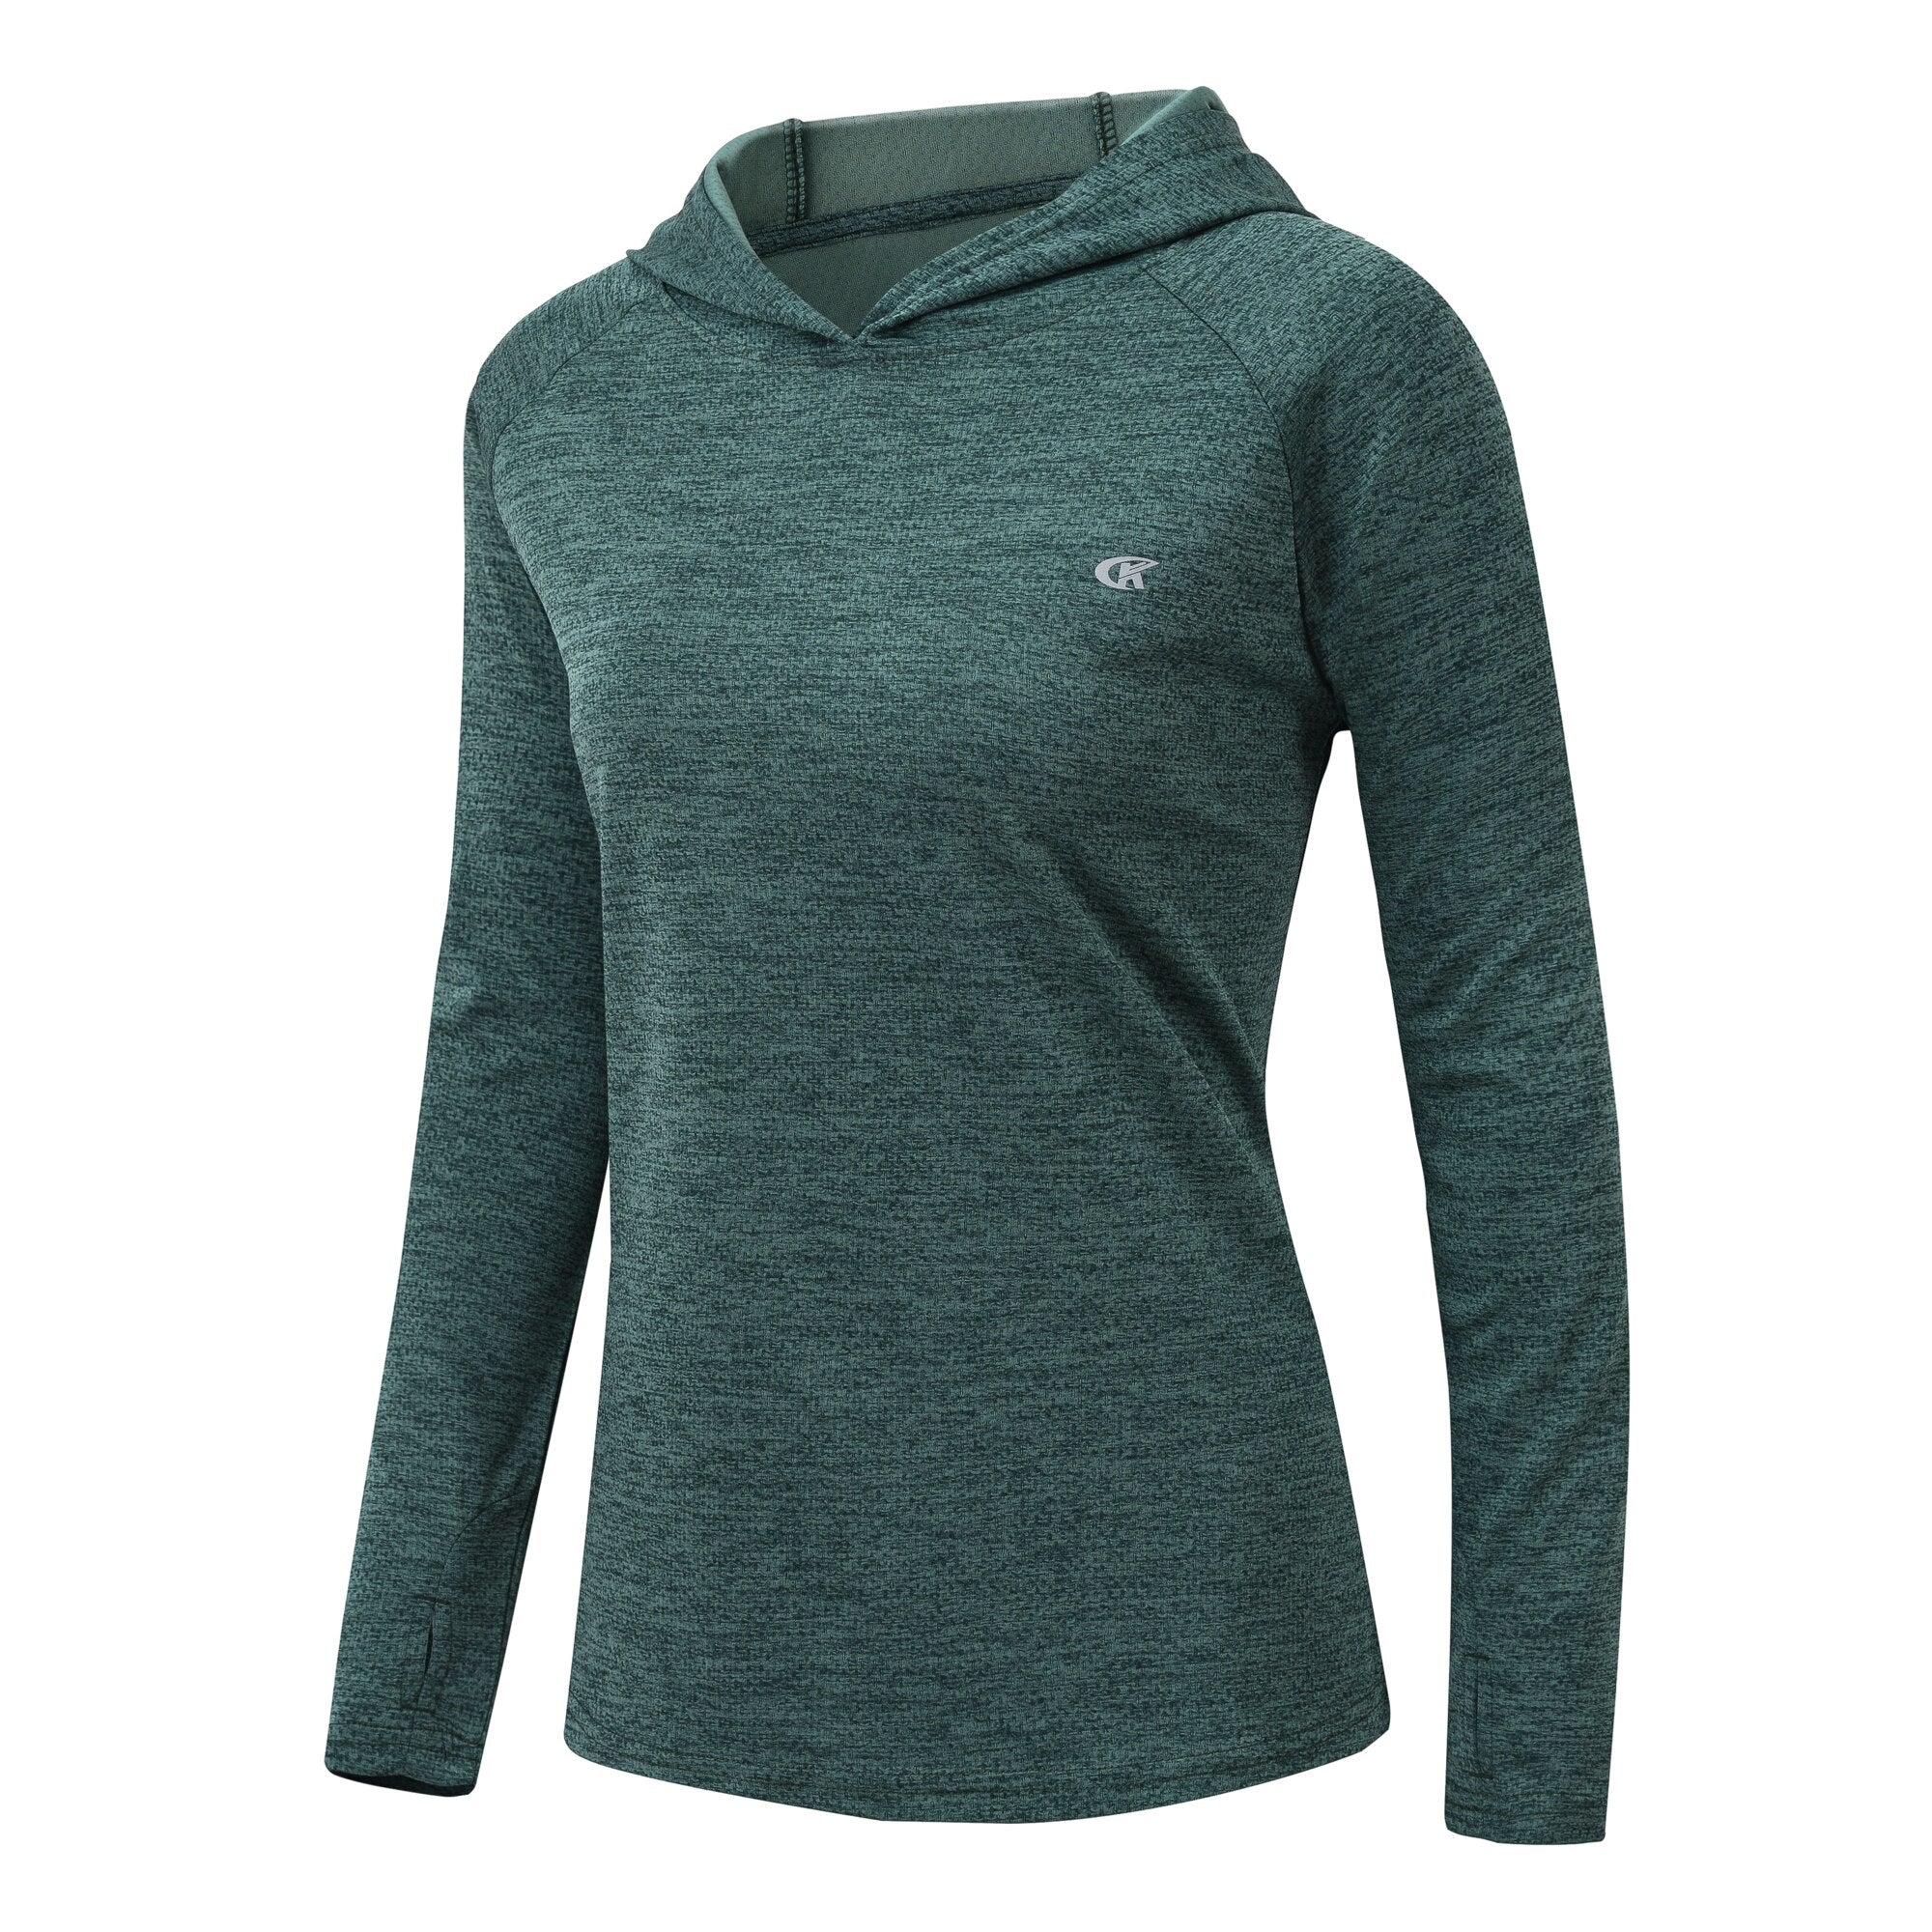 Acheter cyan Hiking and Running Long Sleeve T-Shirt Rash Guard UPF 50+ Quick Dry Lightweight For women